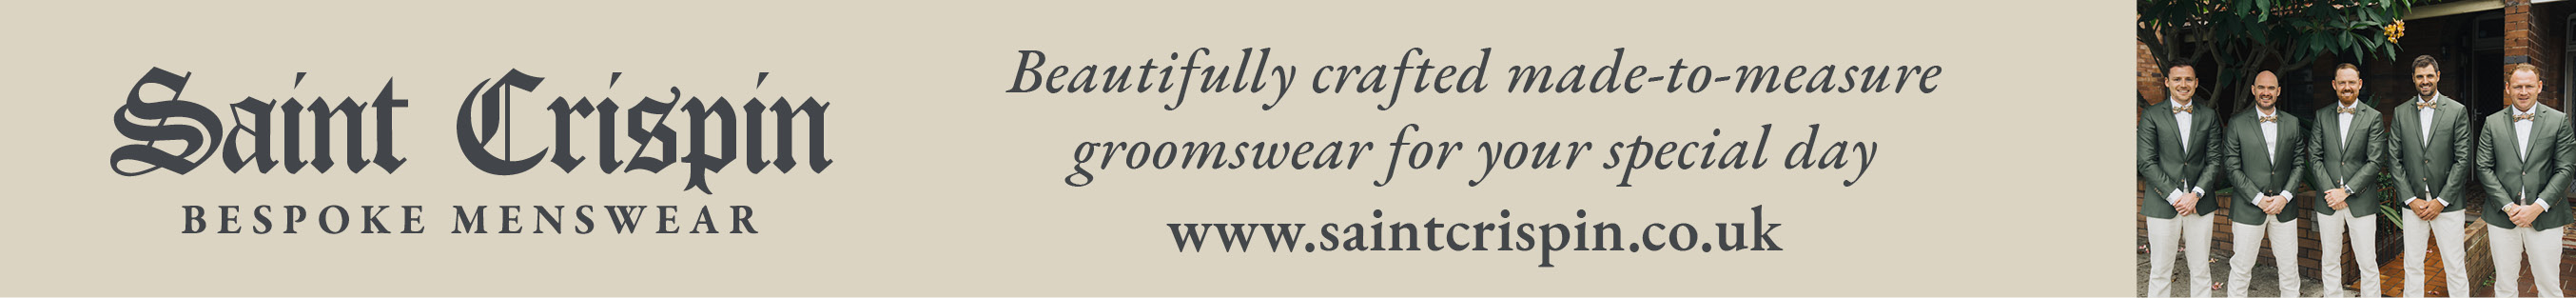 Saint Crispin Bespoke Menswear